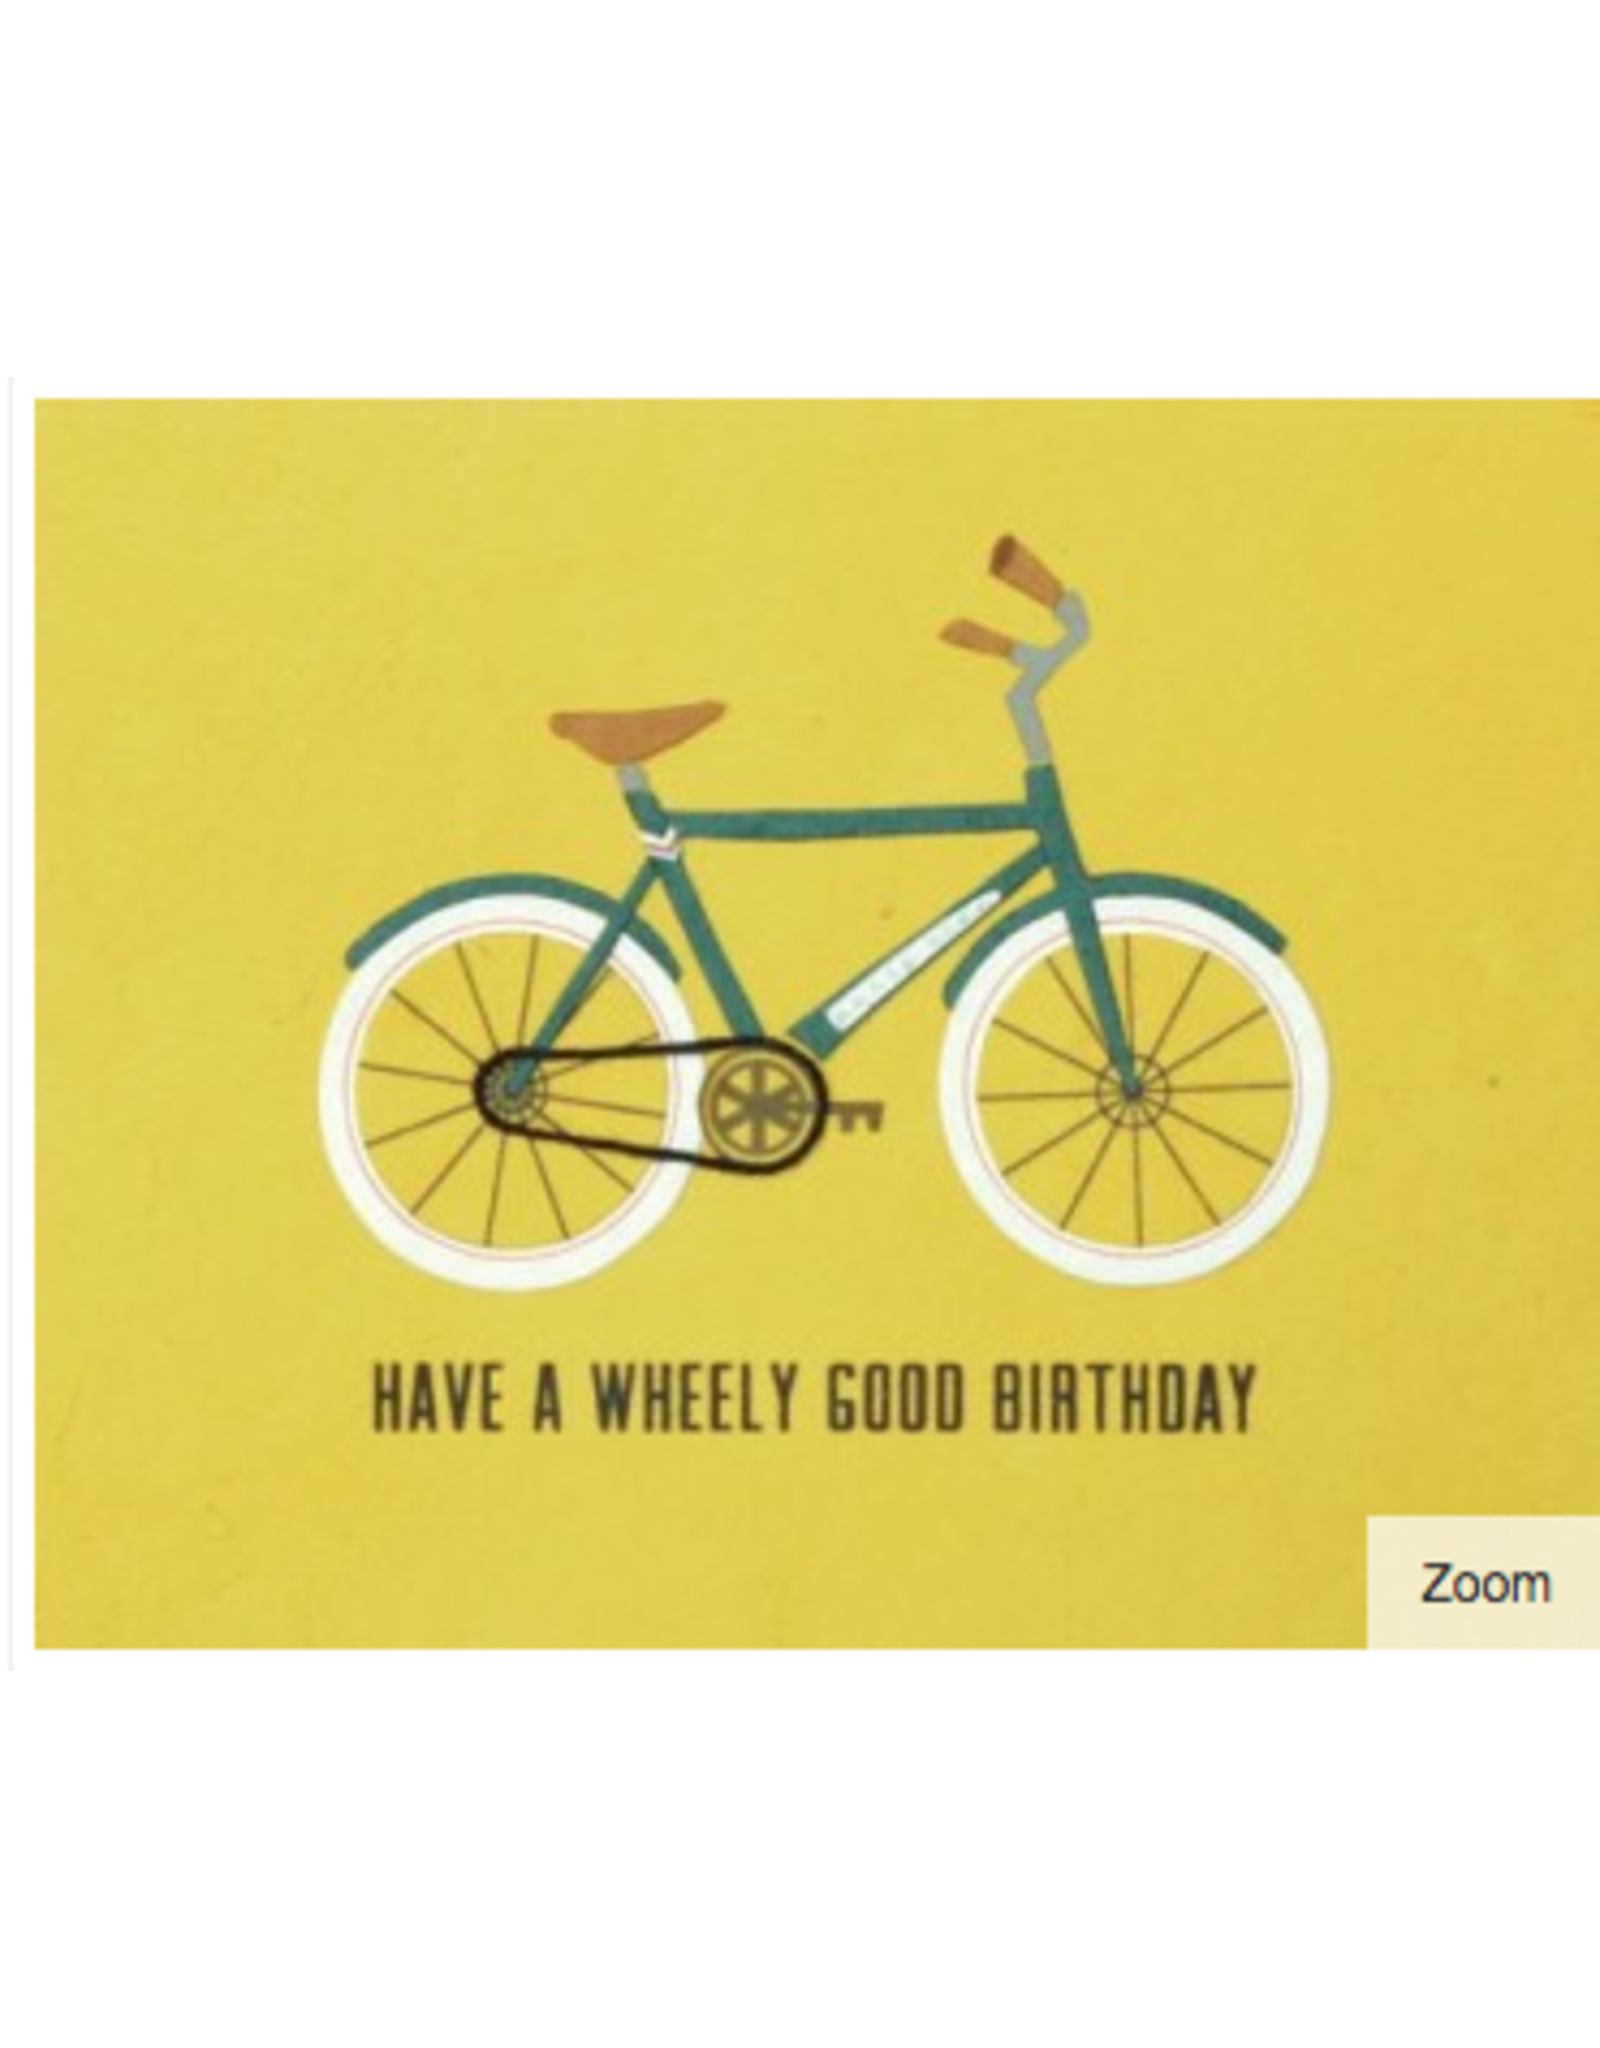 Wheely Good Birthday Greeting Card, Philippines